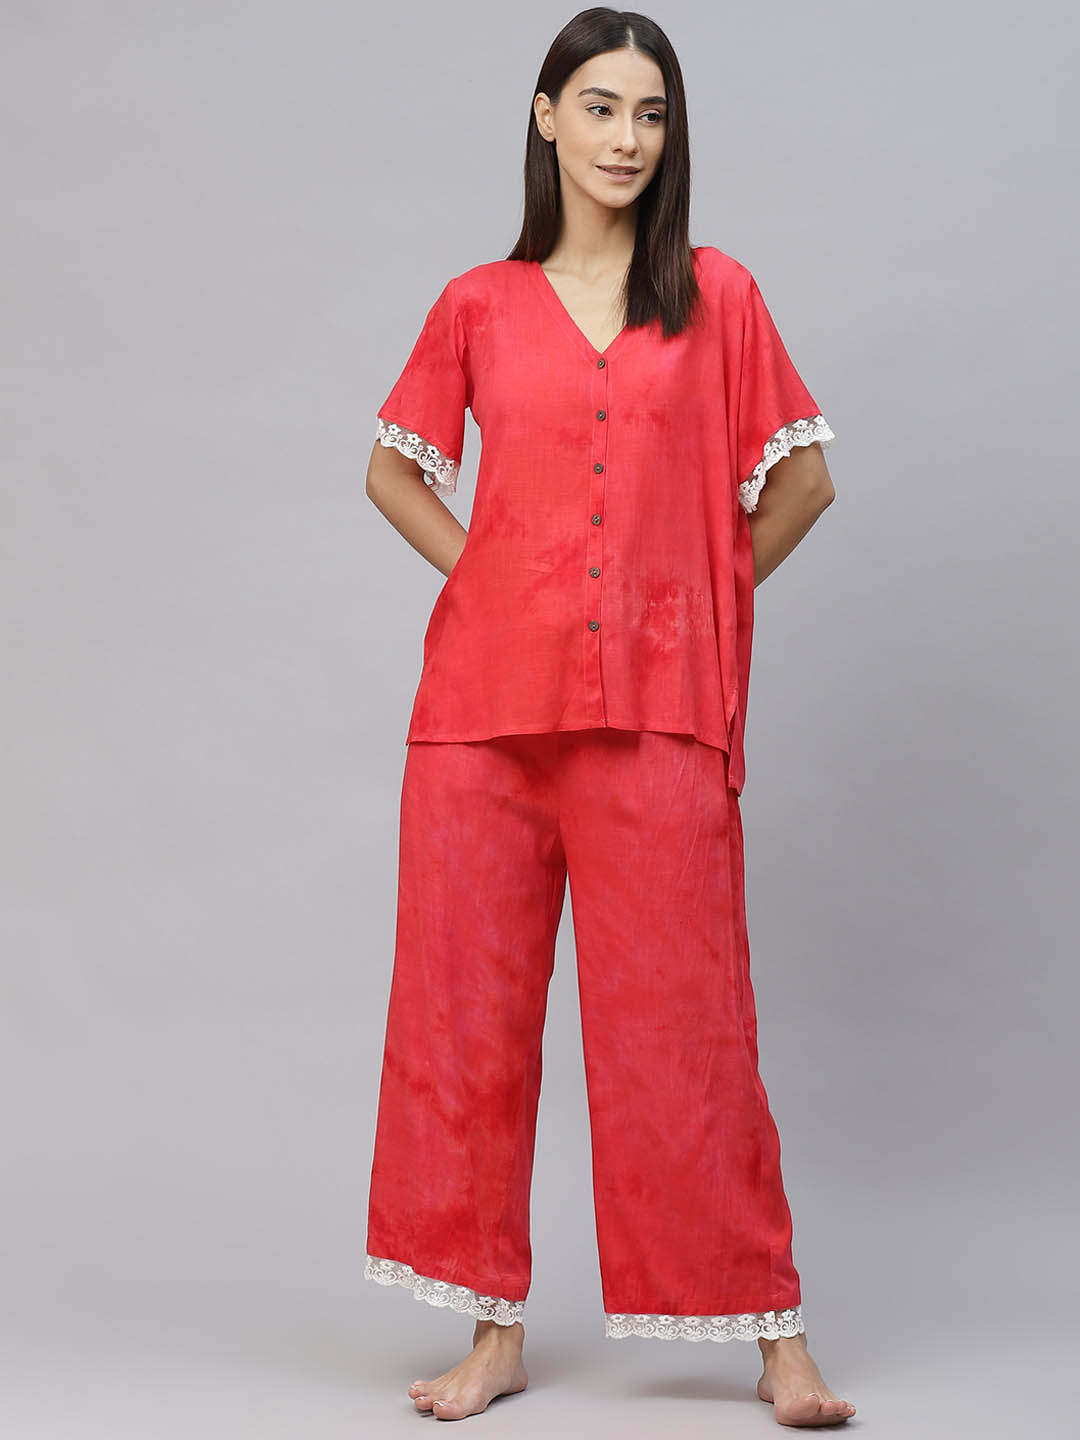 Women Red Dyed Lace Inserts Pyjama Set